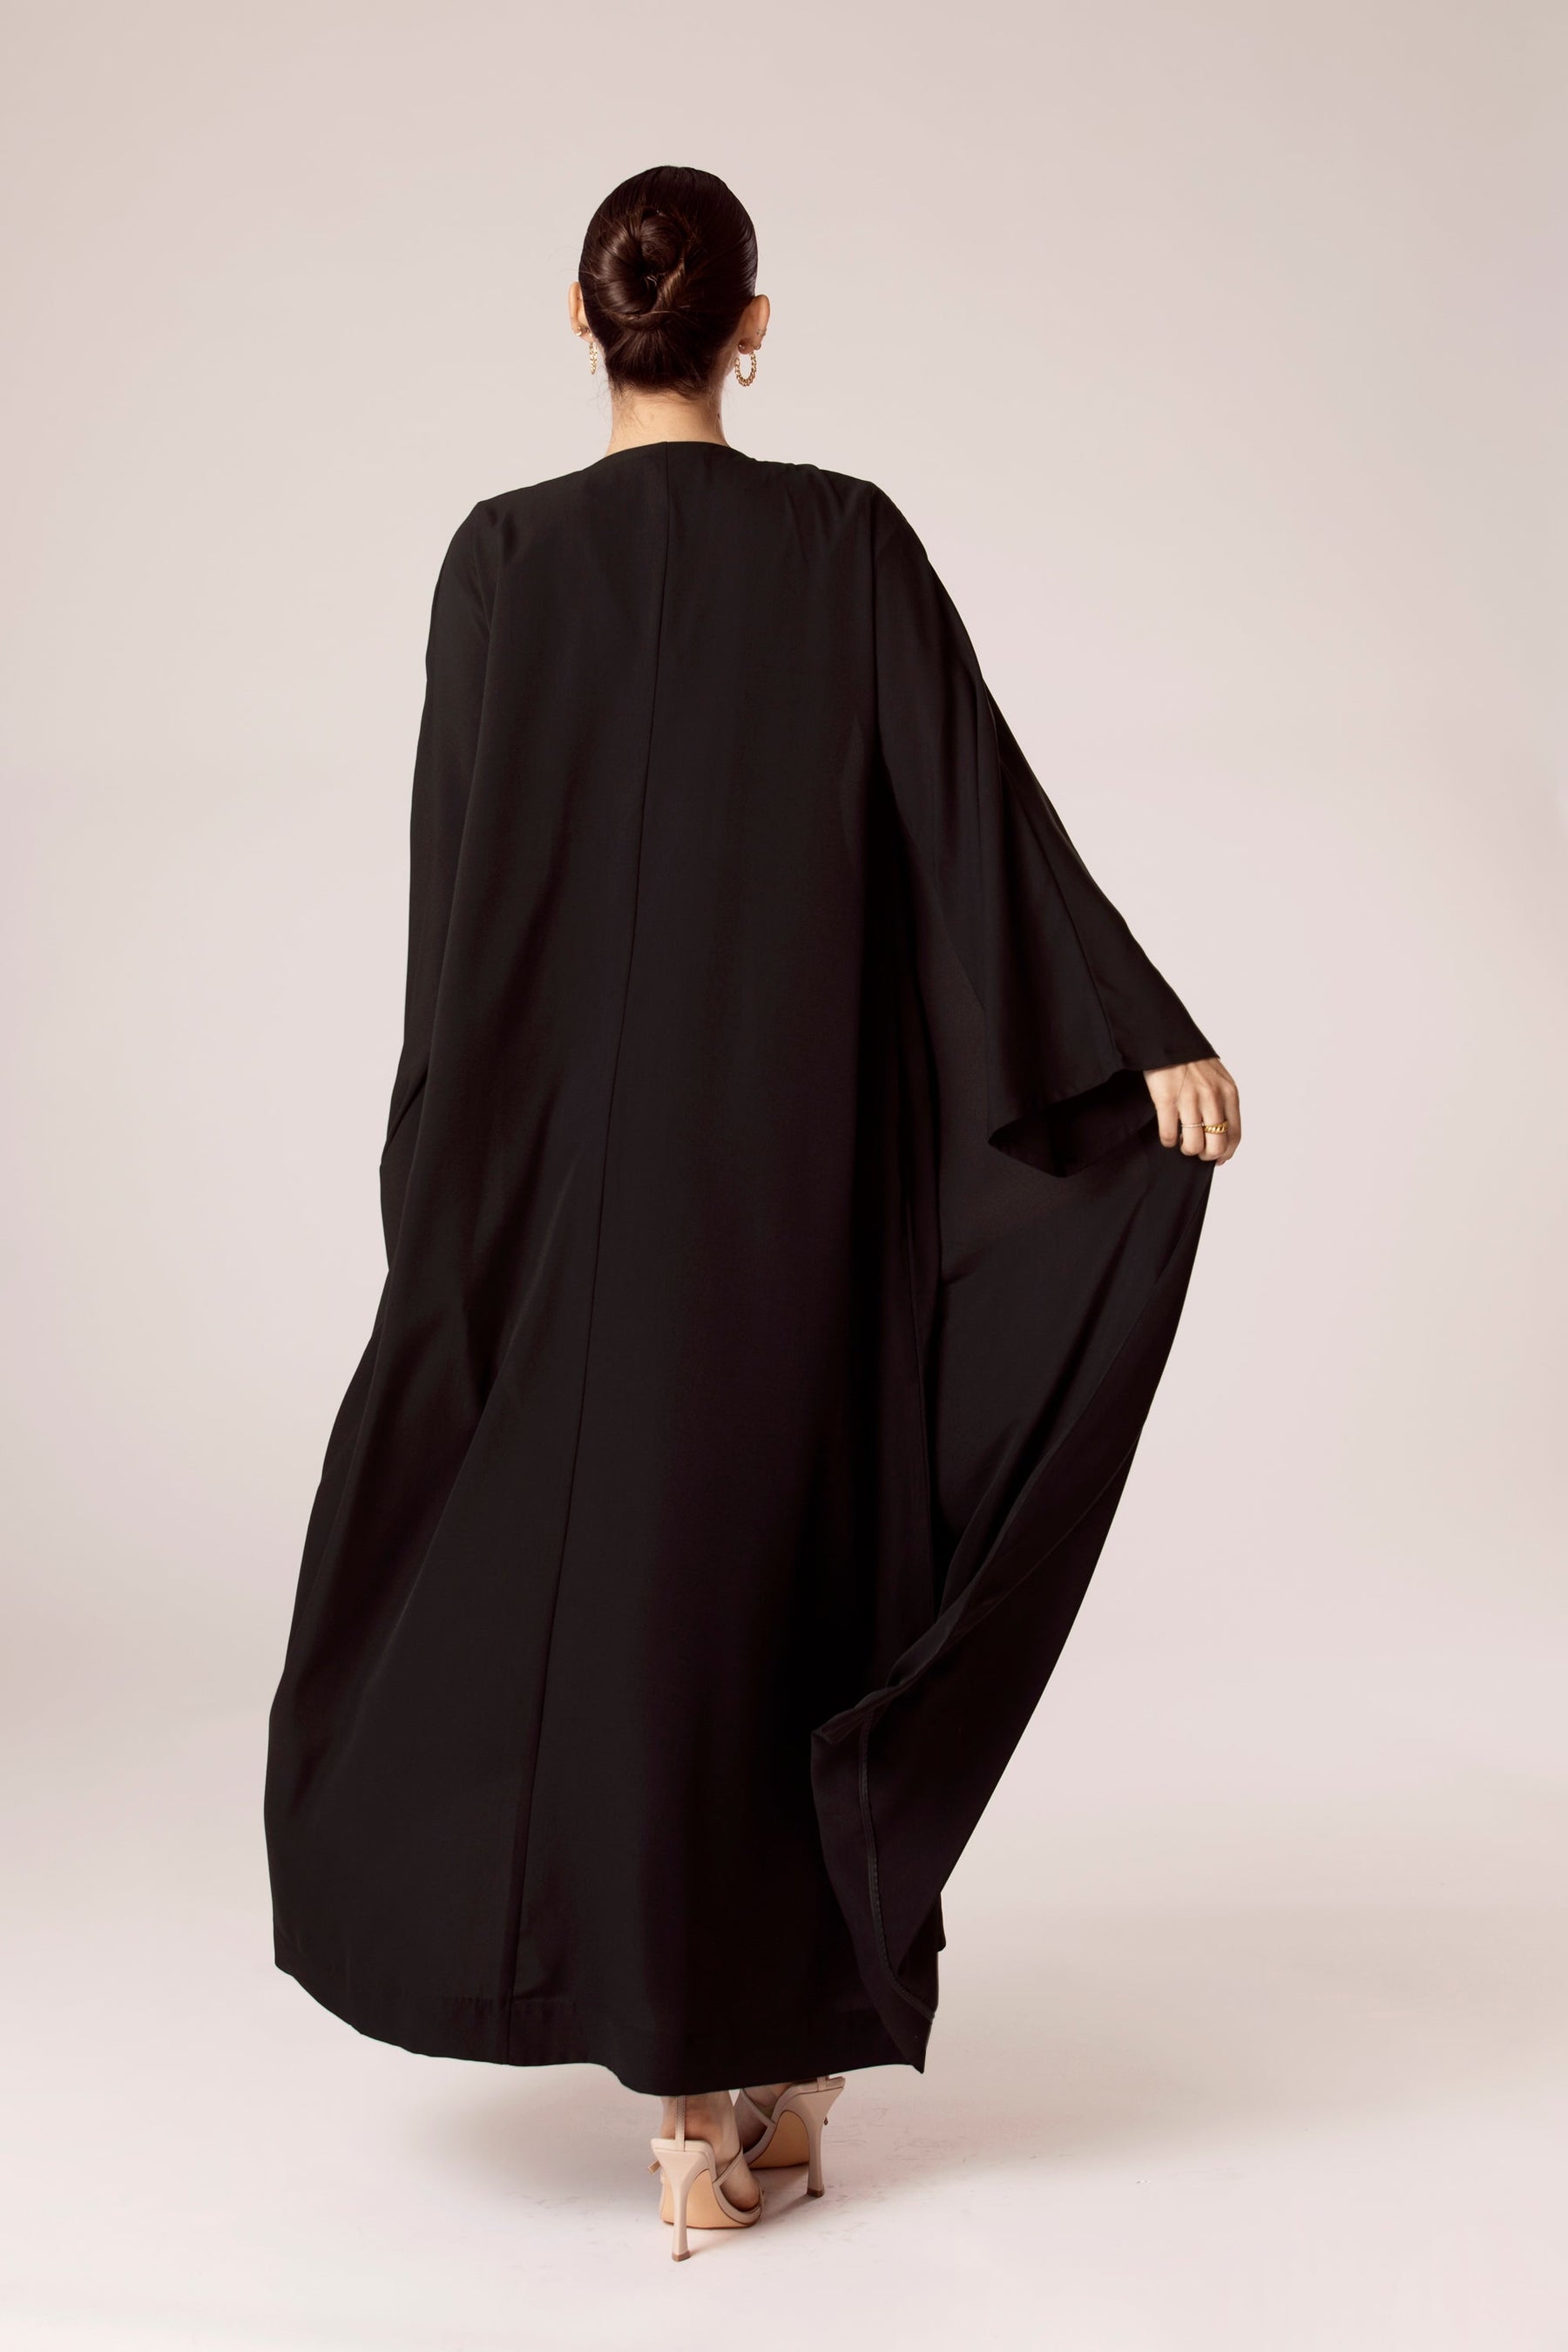 Isabella Open Abaya - Black Veiled Collection 